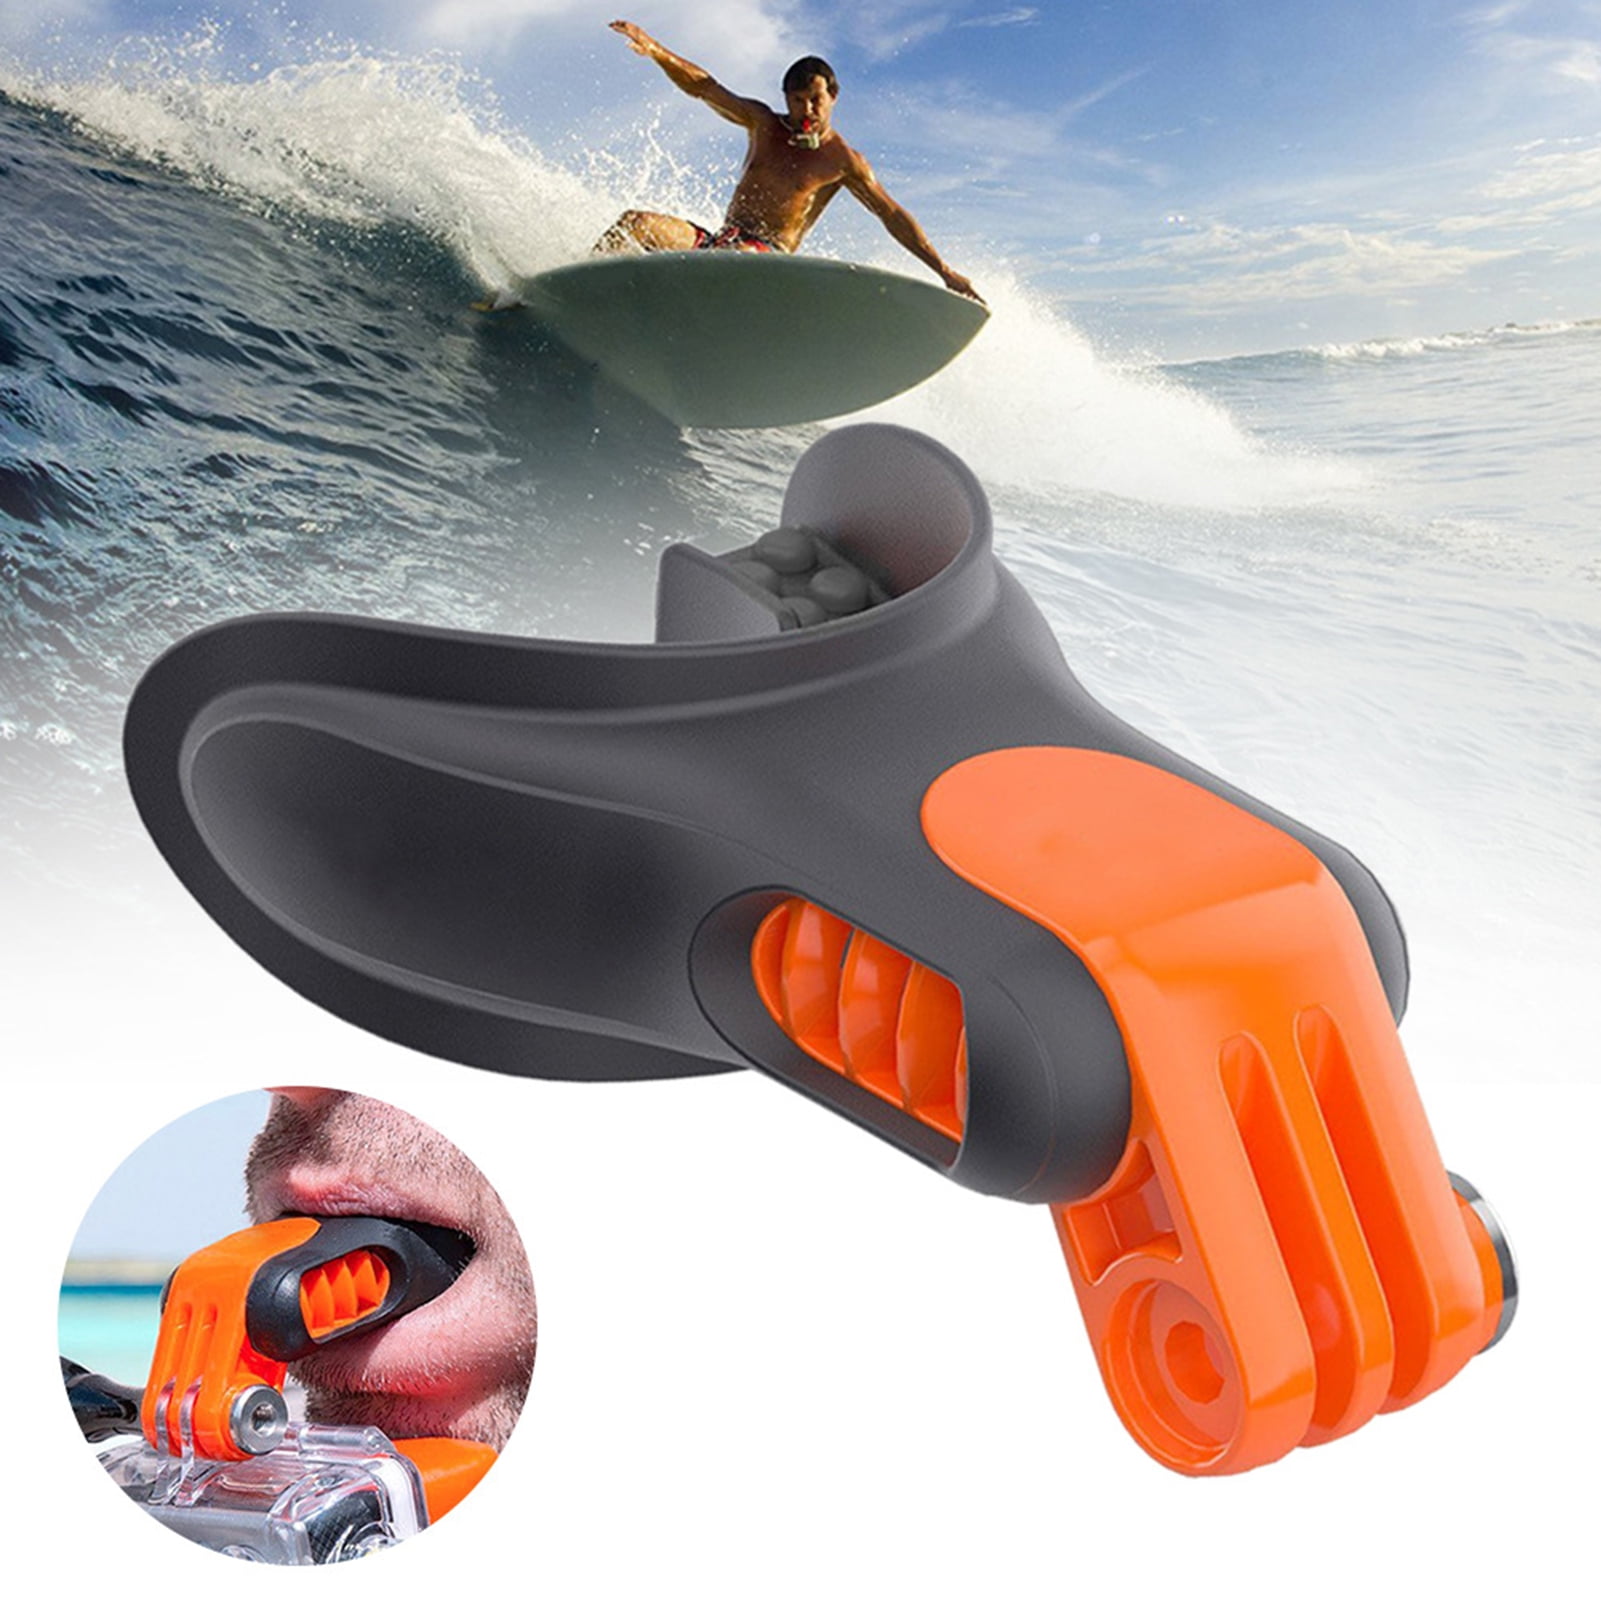 Surf Cameras  Best GoPro Action Cameras for Surfing